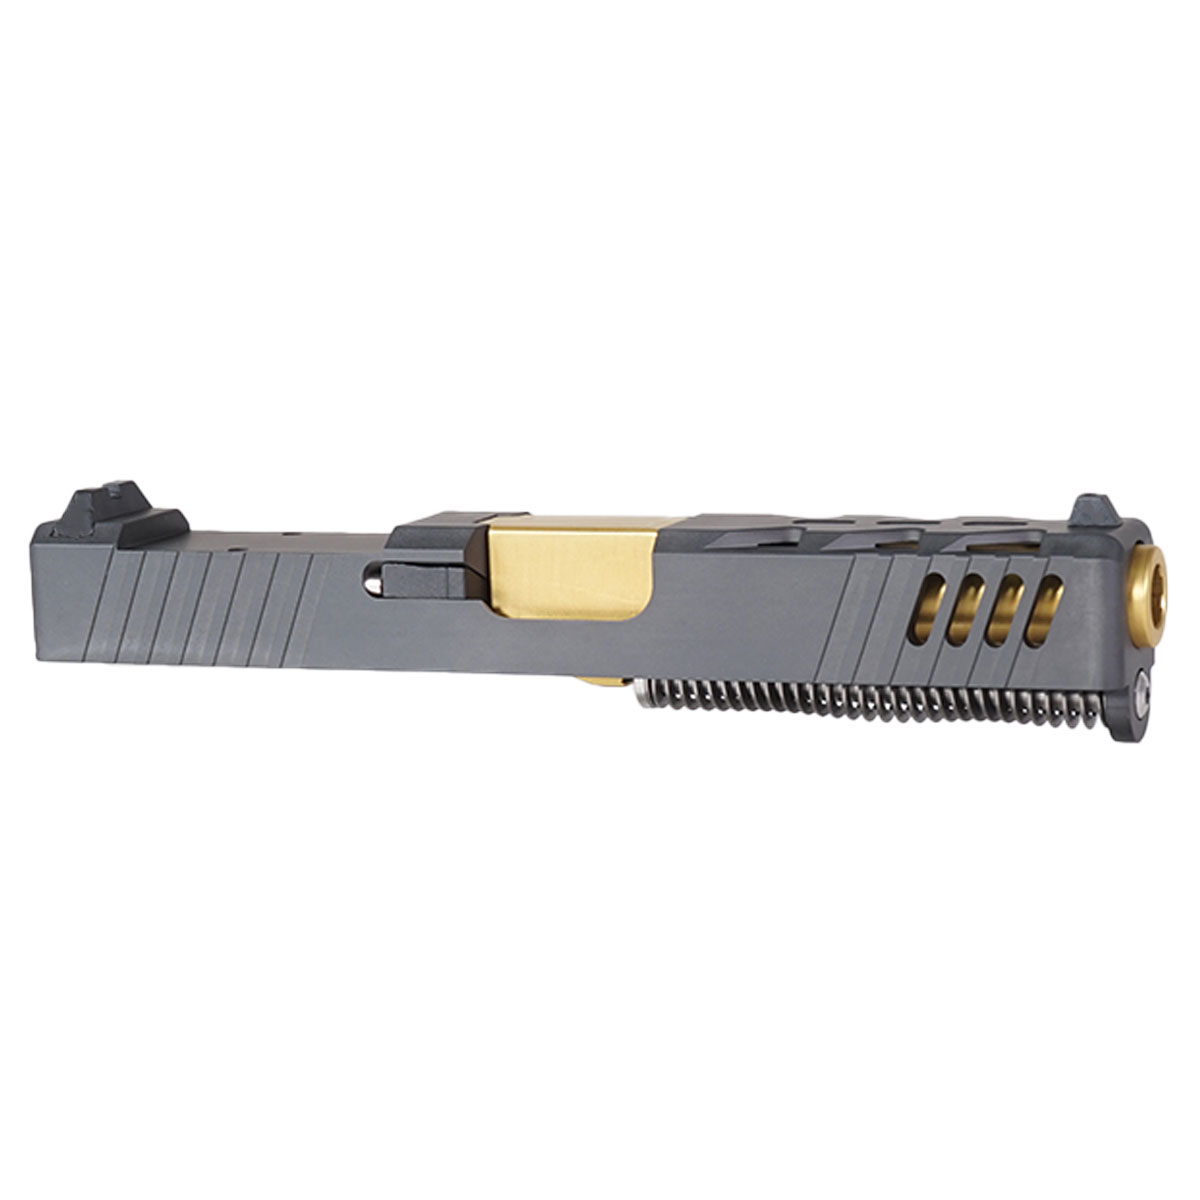 DTT 'High Ground' 9mm Complete Slide Kit - Glock 19 Gen 1-3 Compatible